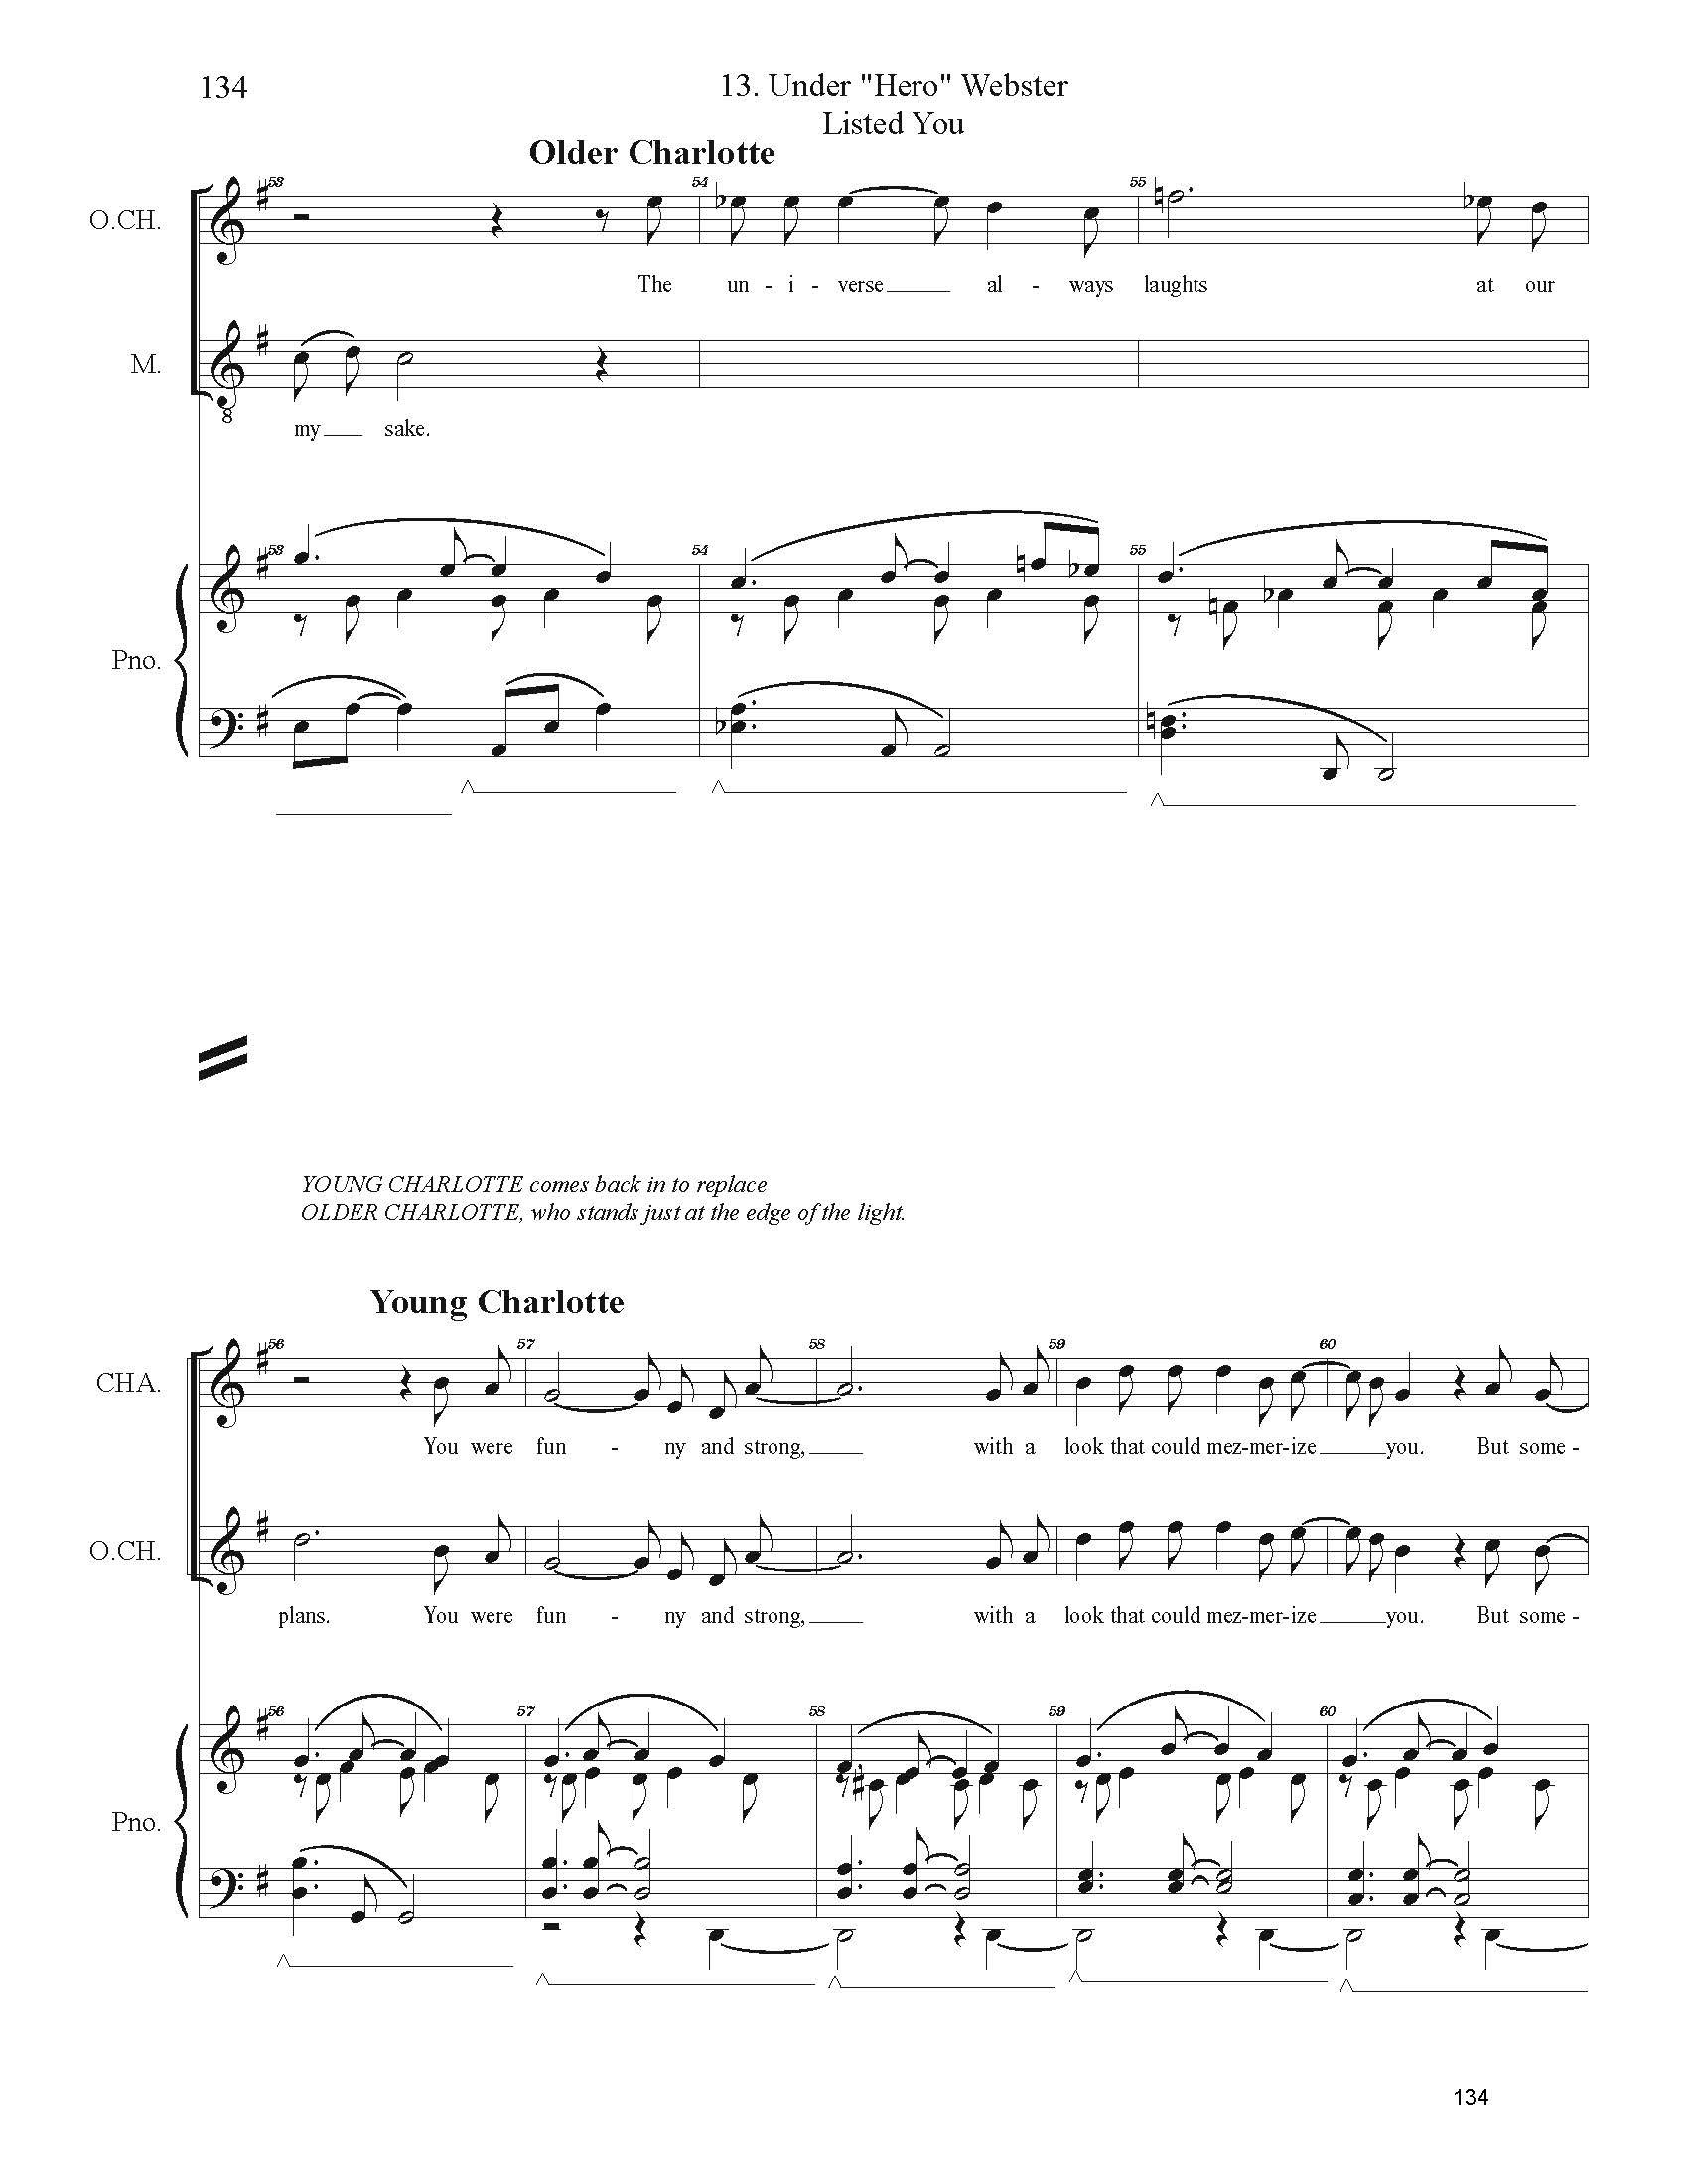 FULL PIANO VOCAL SCORE DRAFT 1 - Score_Page_134.jpg